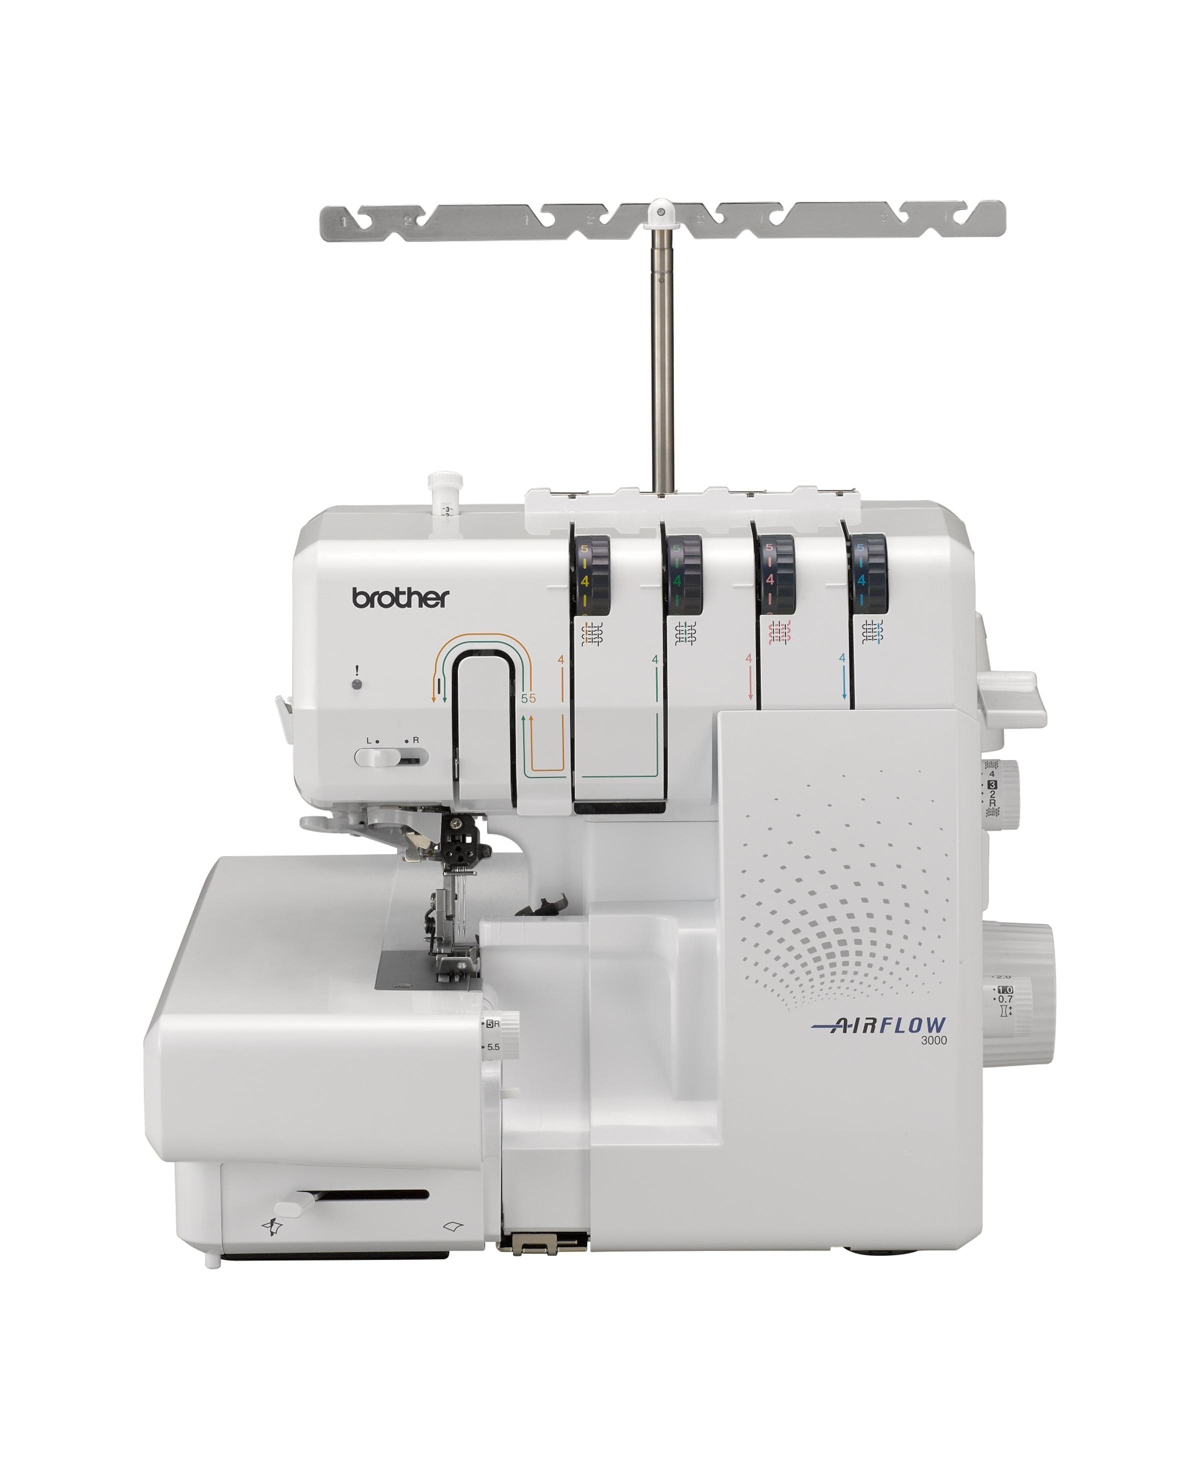 Airflow 3000 Air Serger Sewing Machine - White